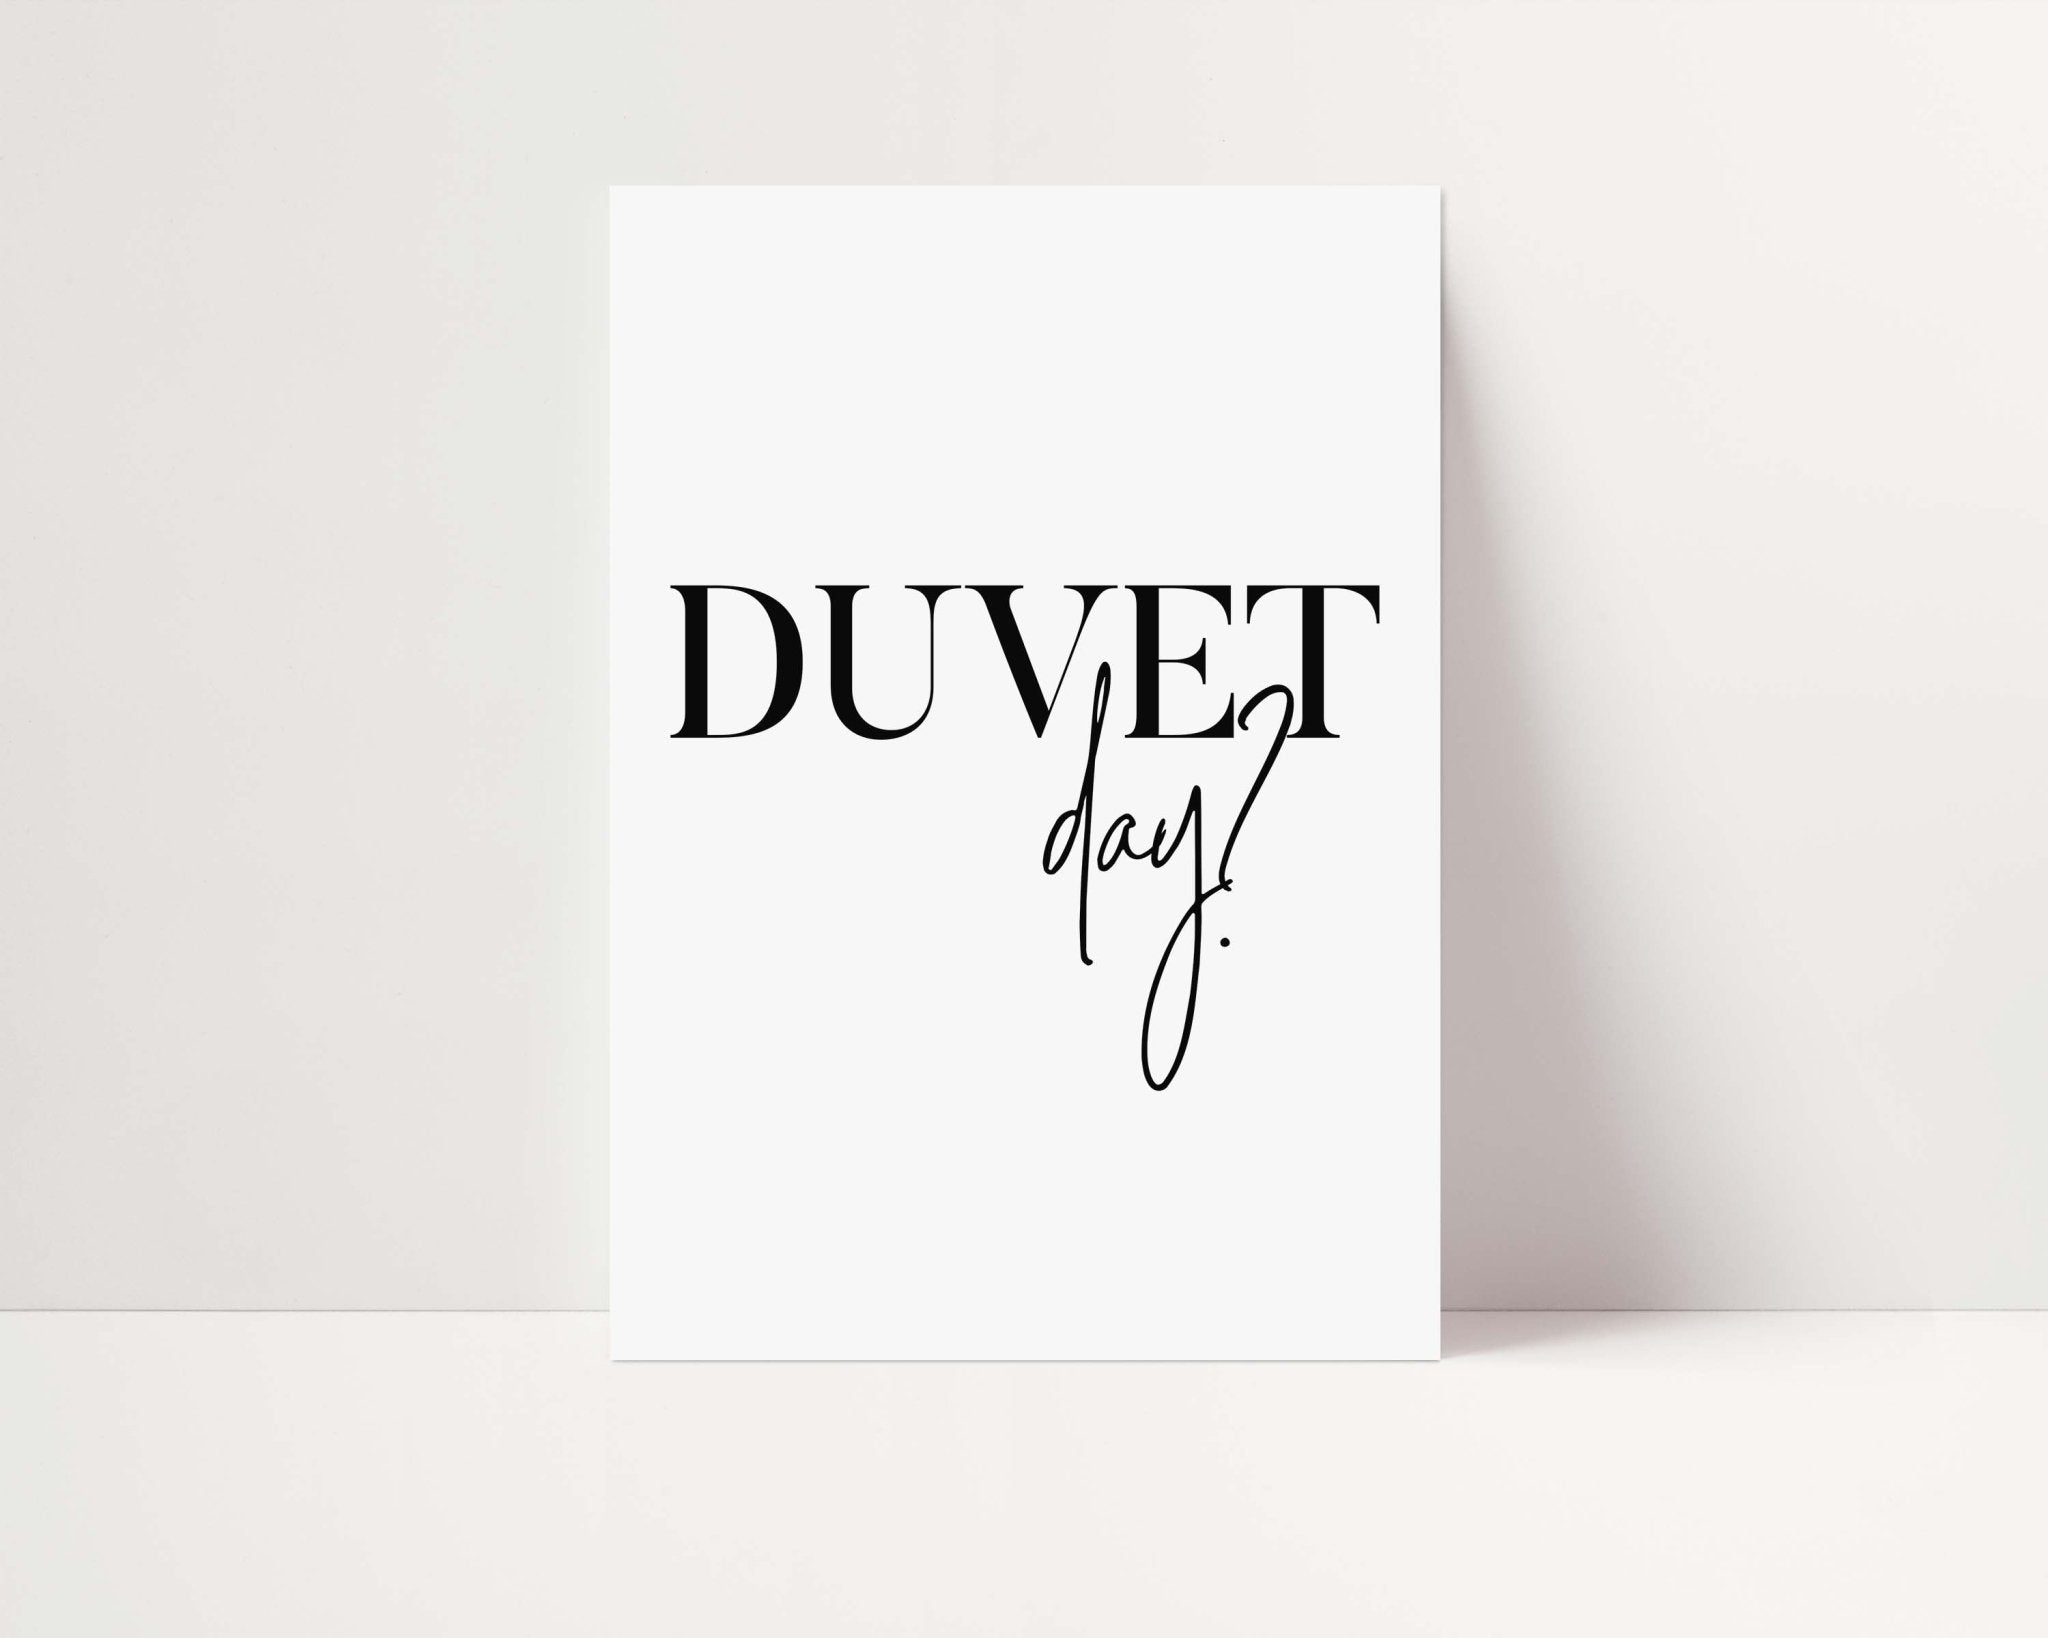 Duvet Day Poster - D'Luxe Prints